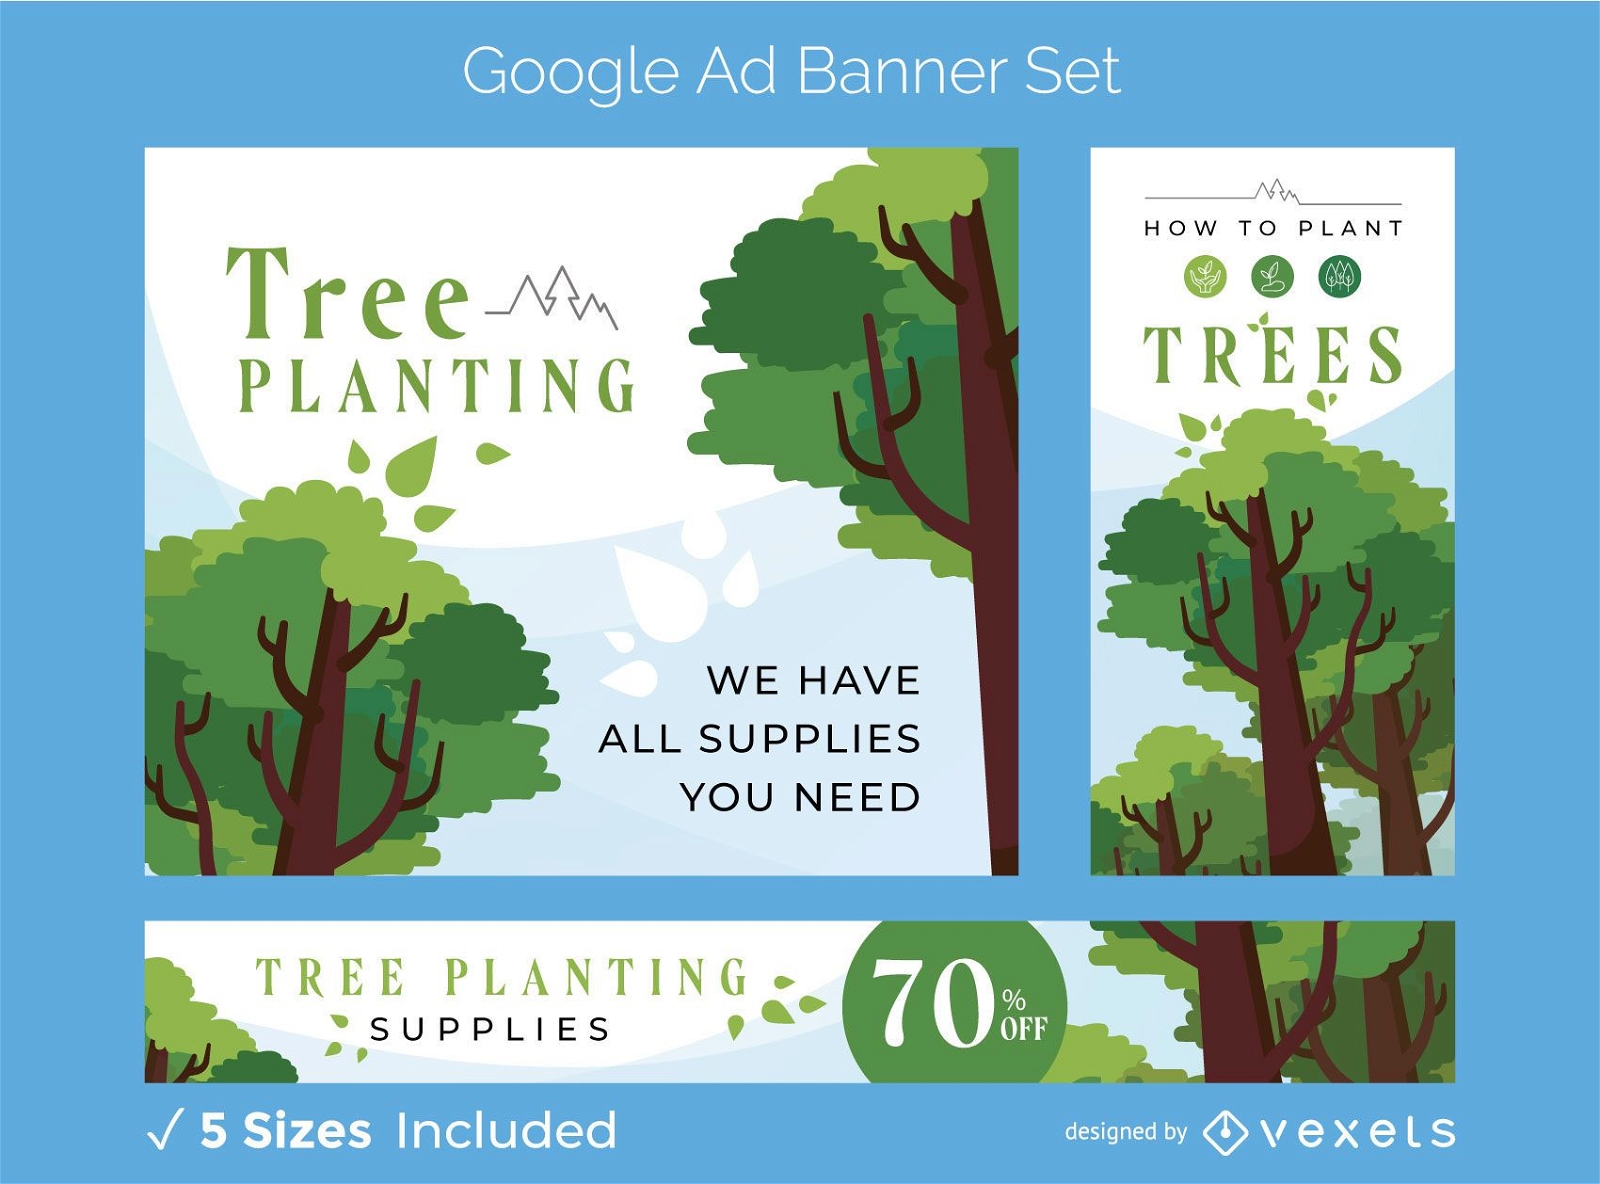 Tree planting ads banner set